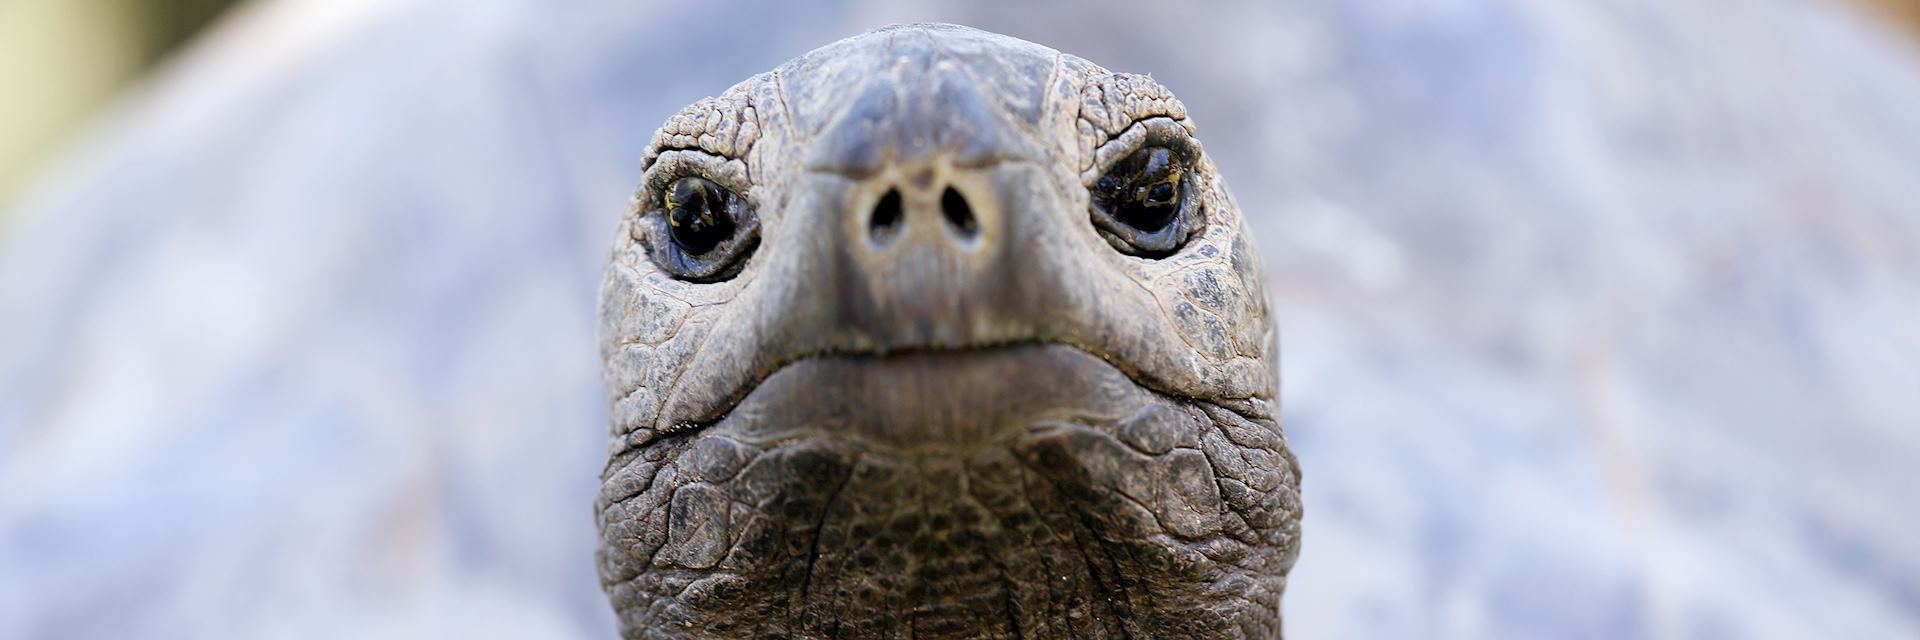 Giant tortoise, Curieuse Island